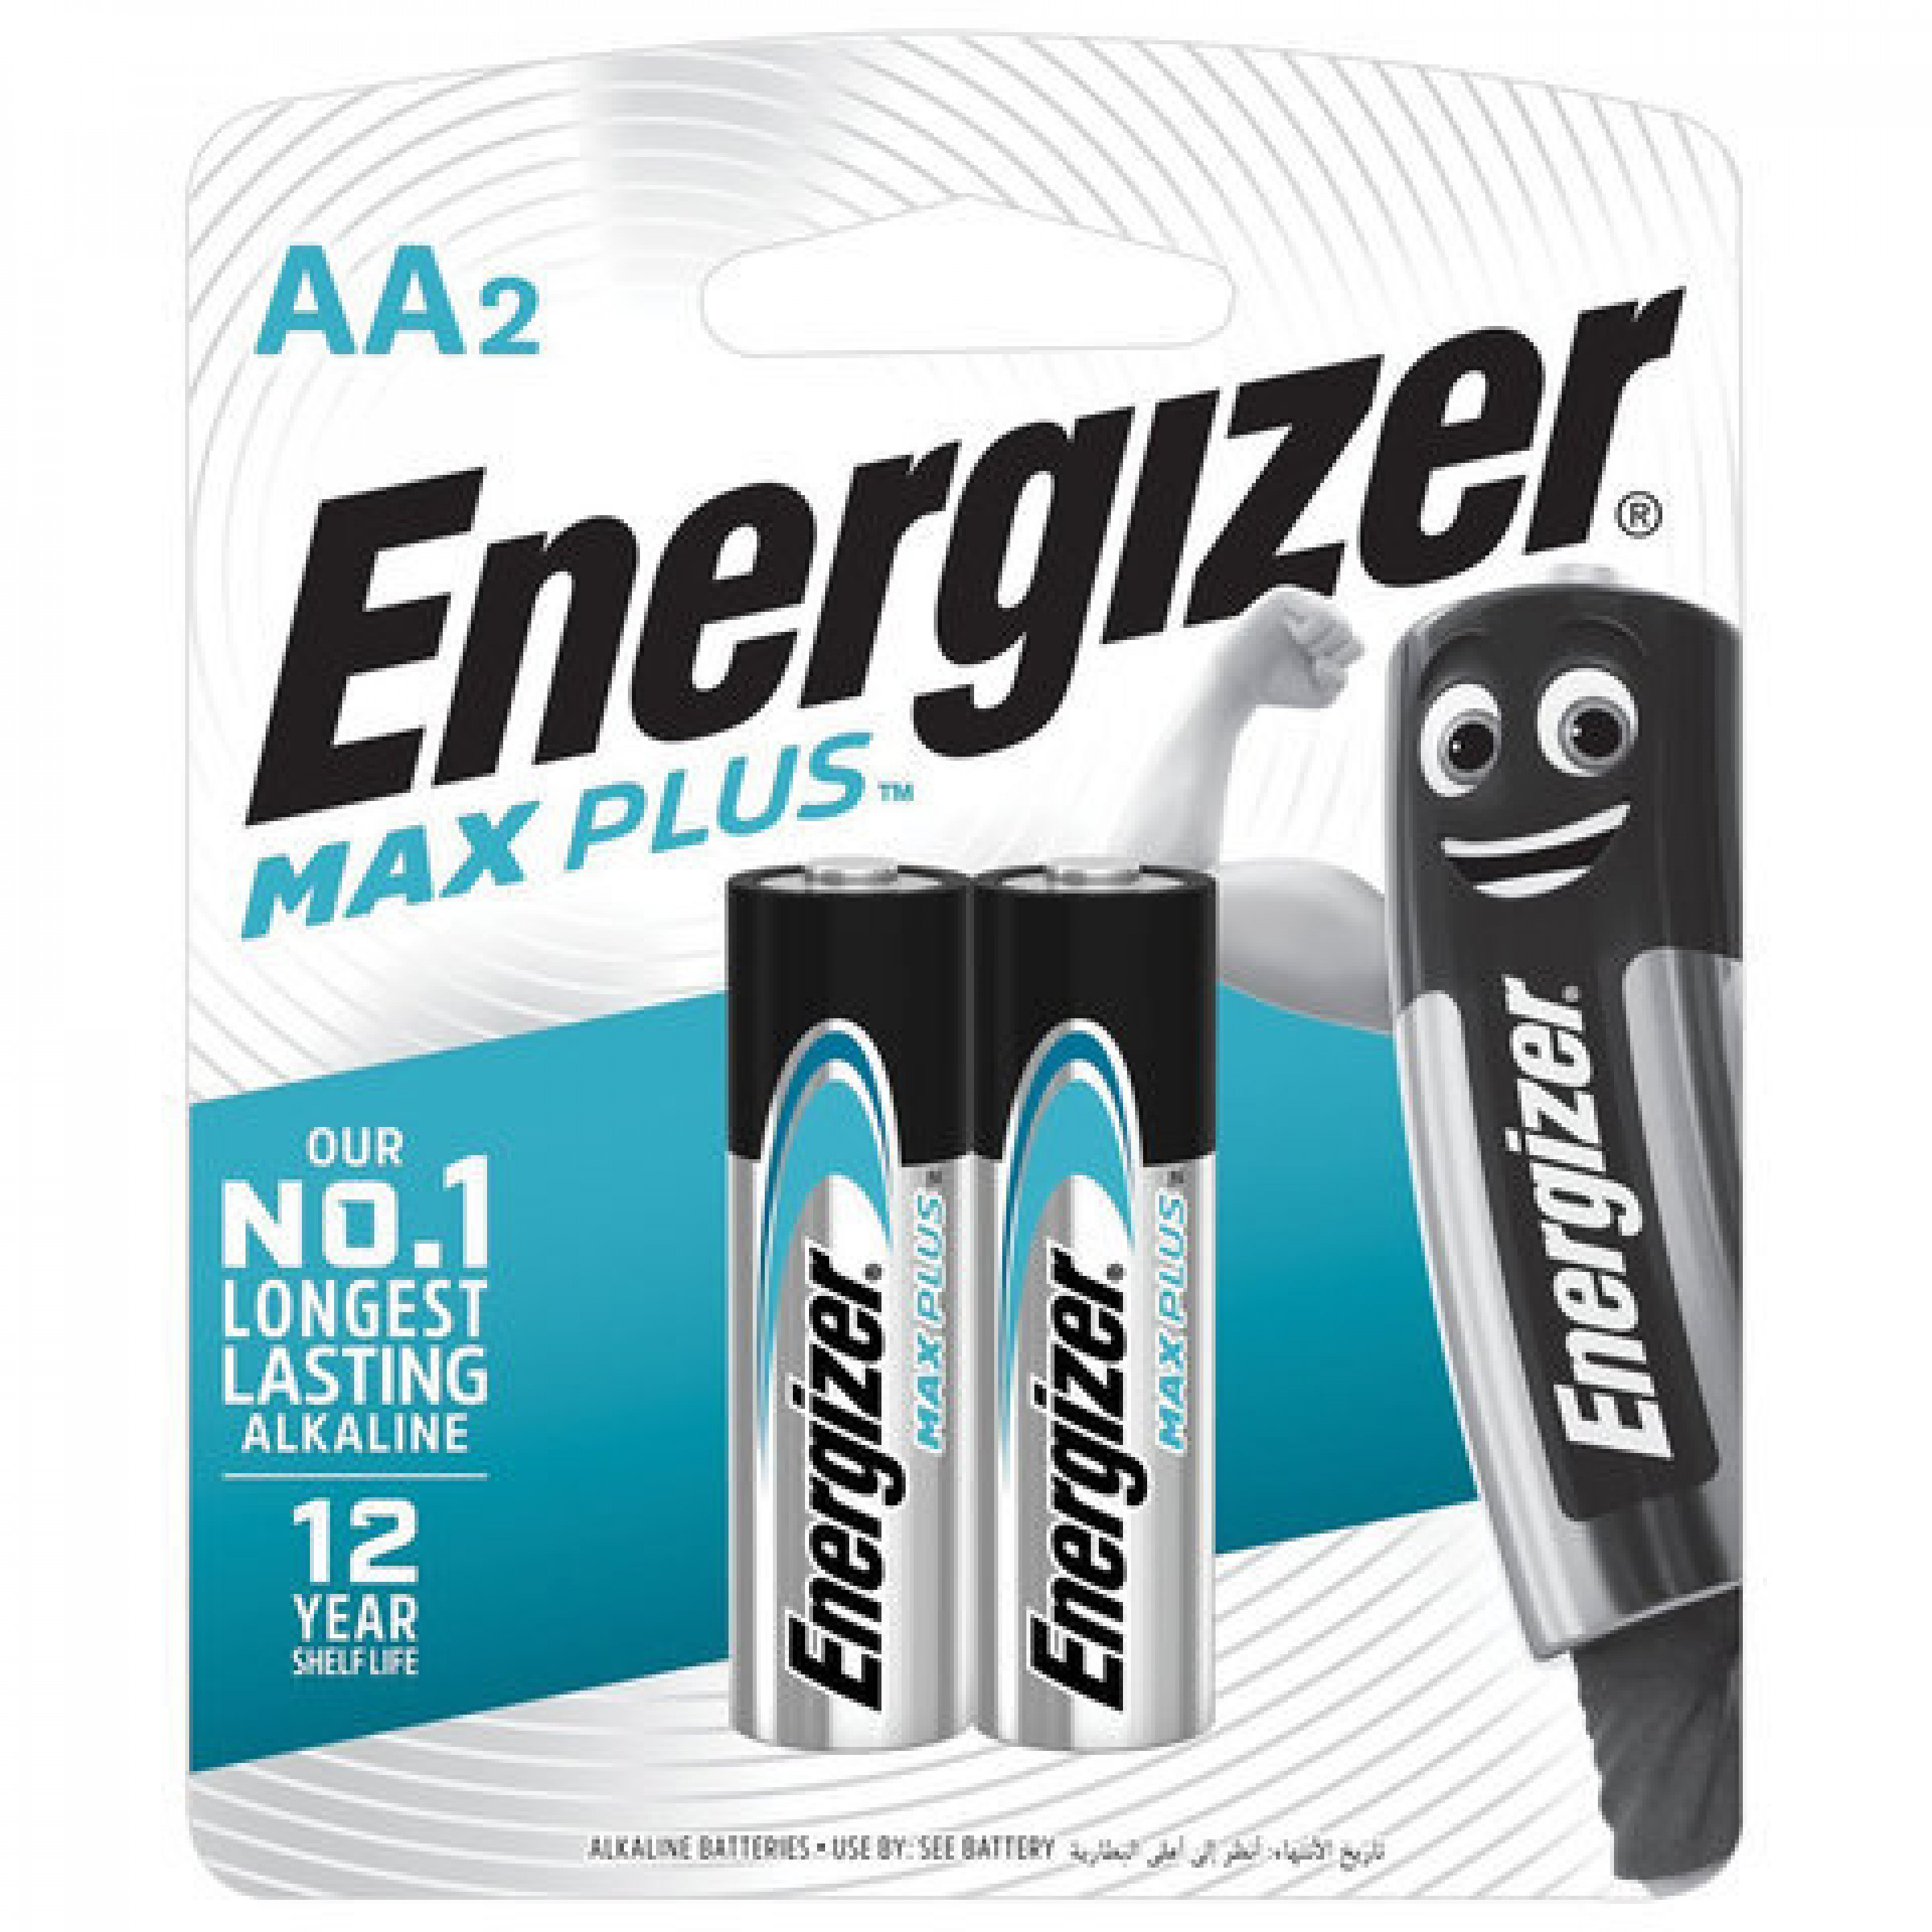 Батарейки Max Plus AA/E91 BP2 ENERGIZER, 2шт